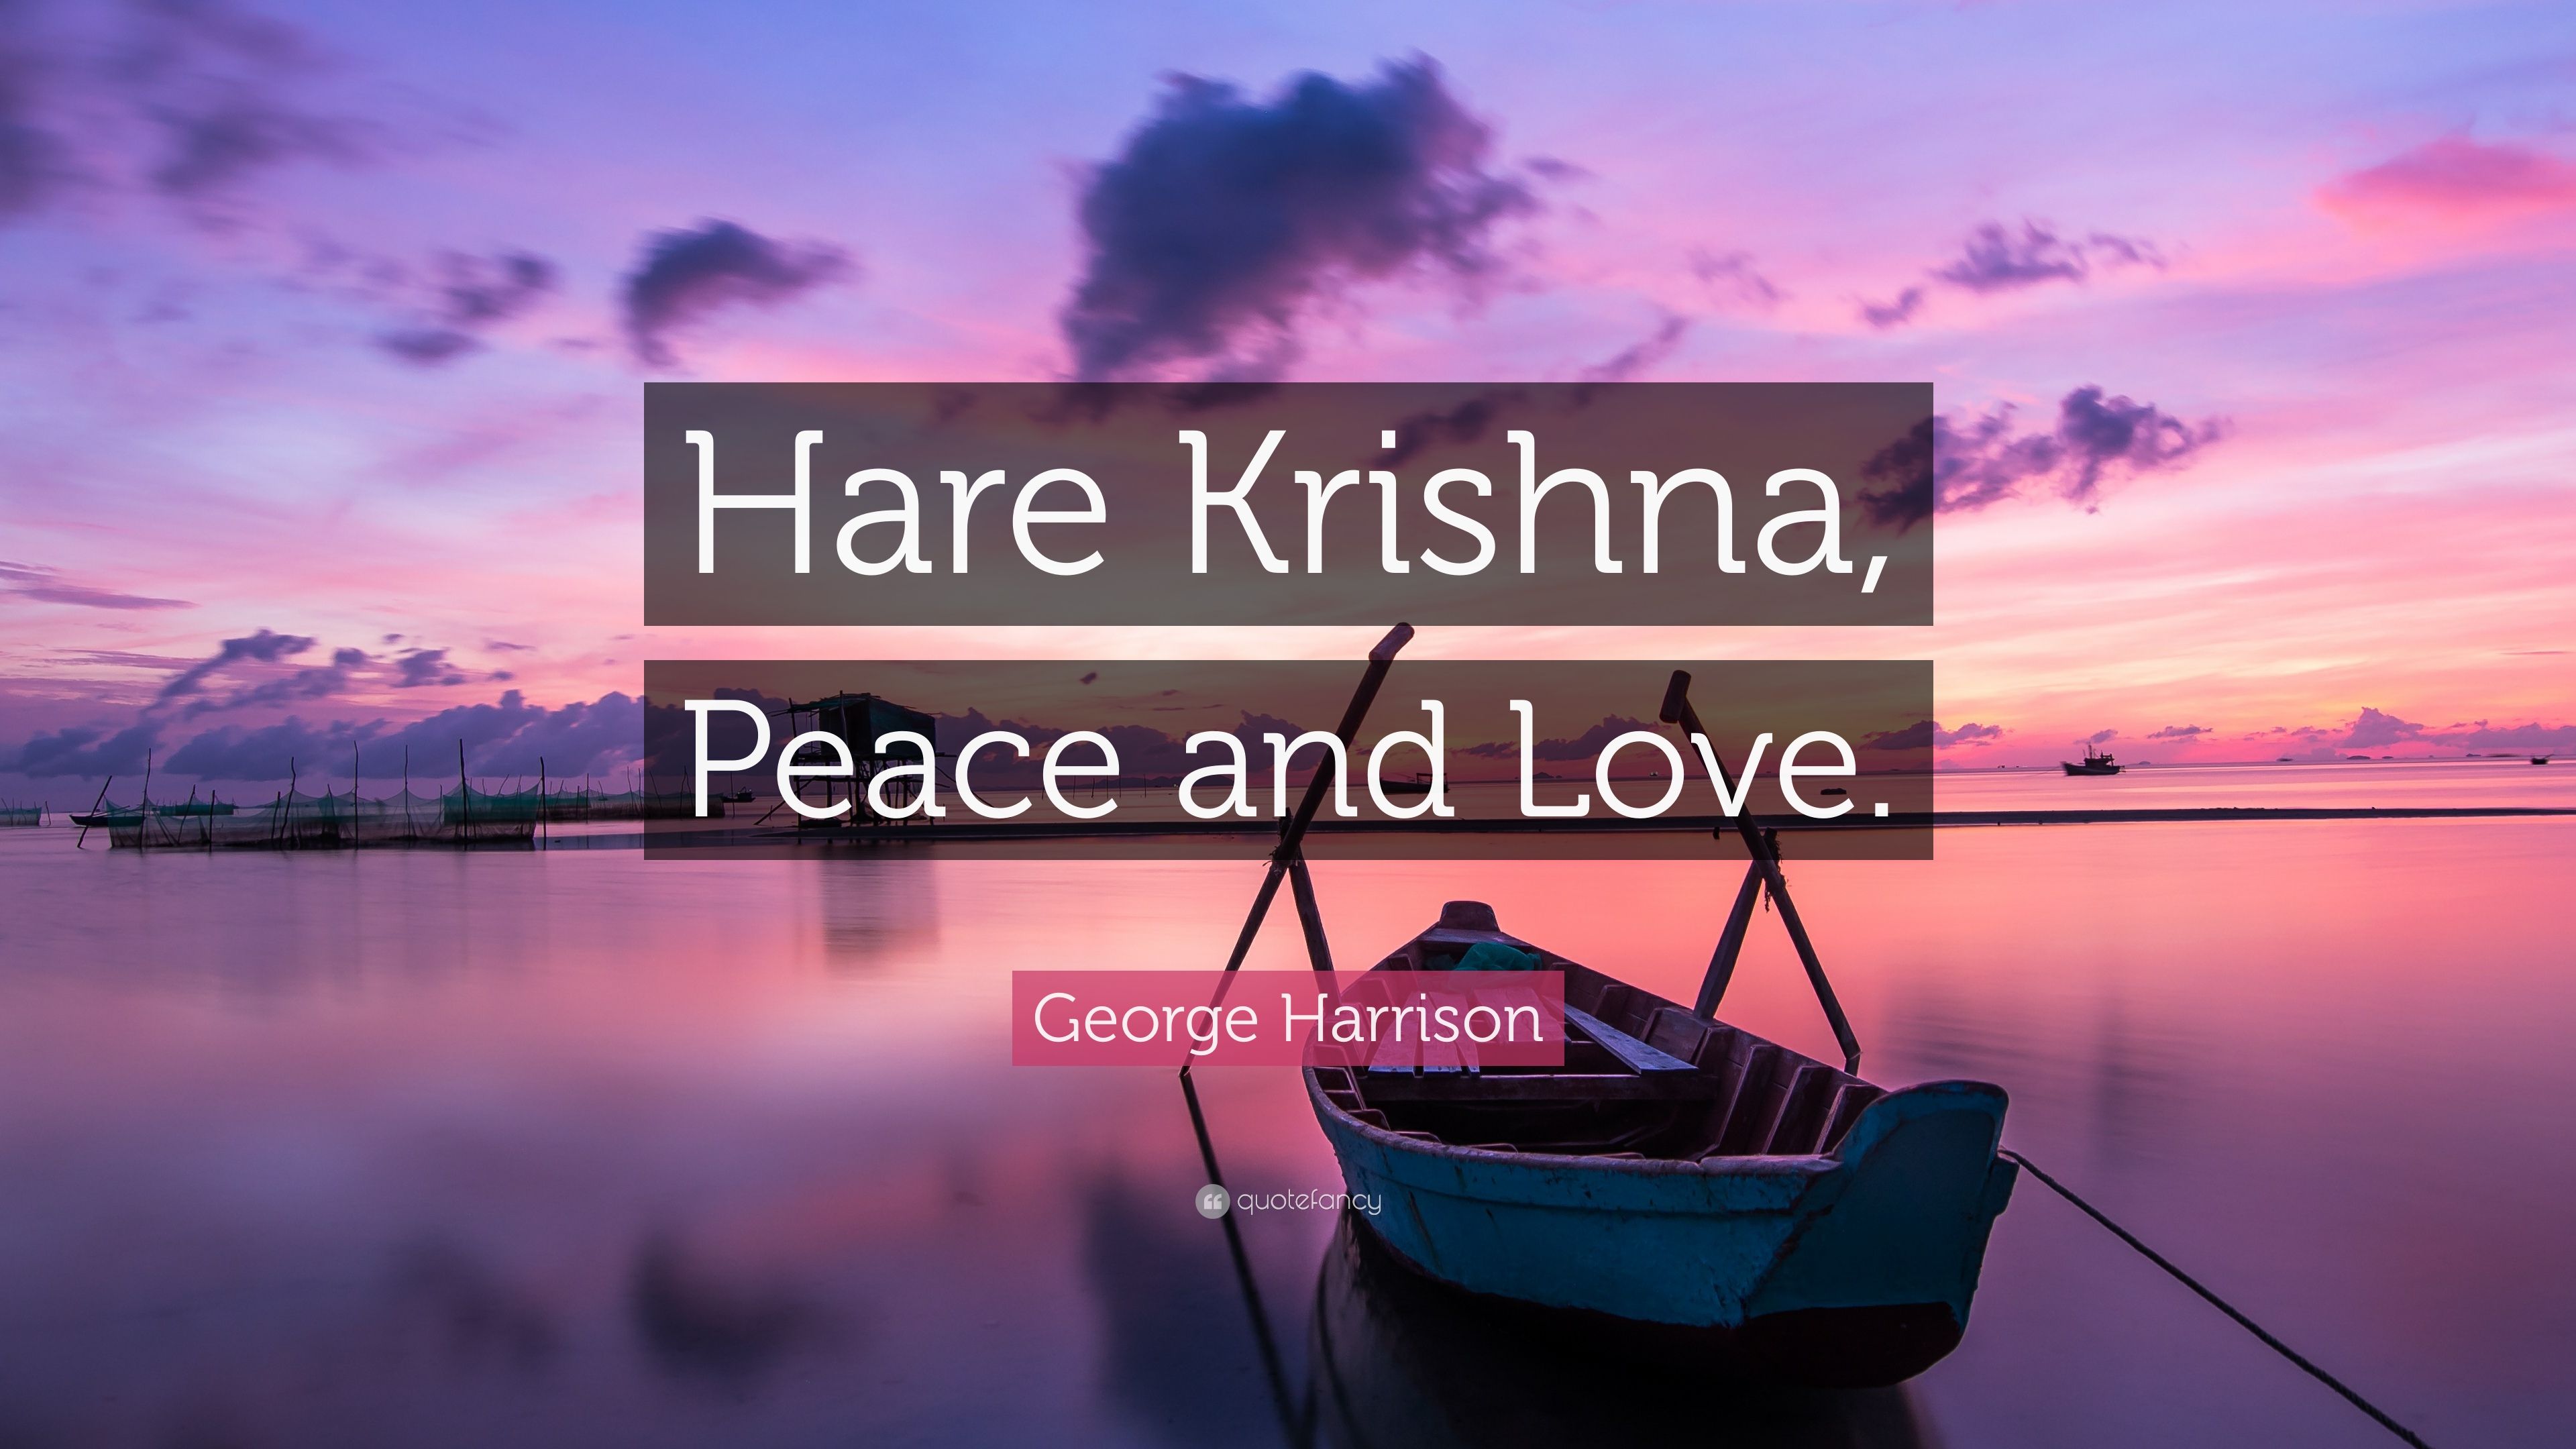 George Harrison Quote: “Hare Krishna, Peace and Love.” 12